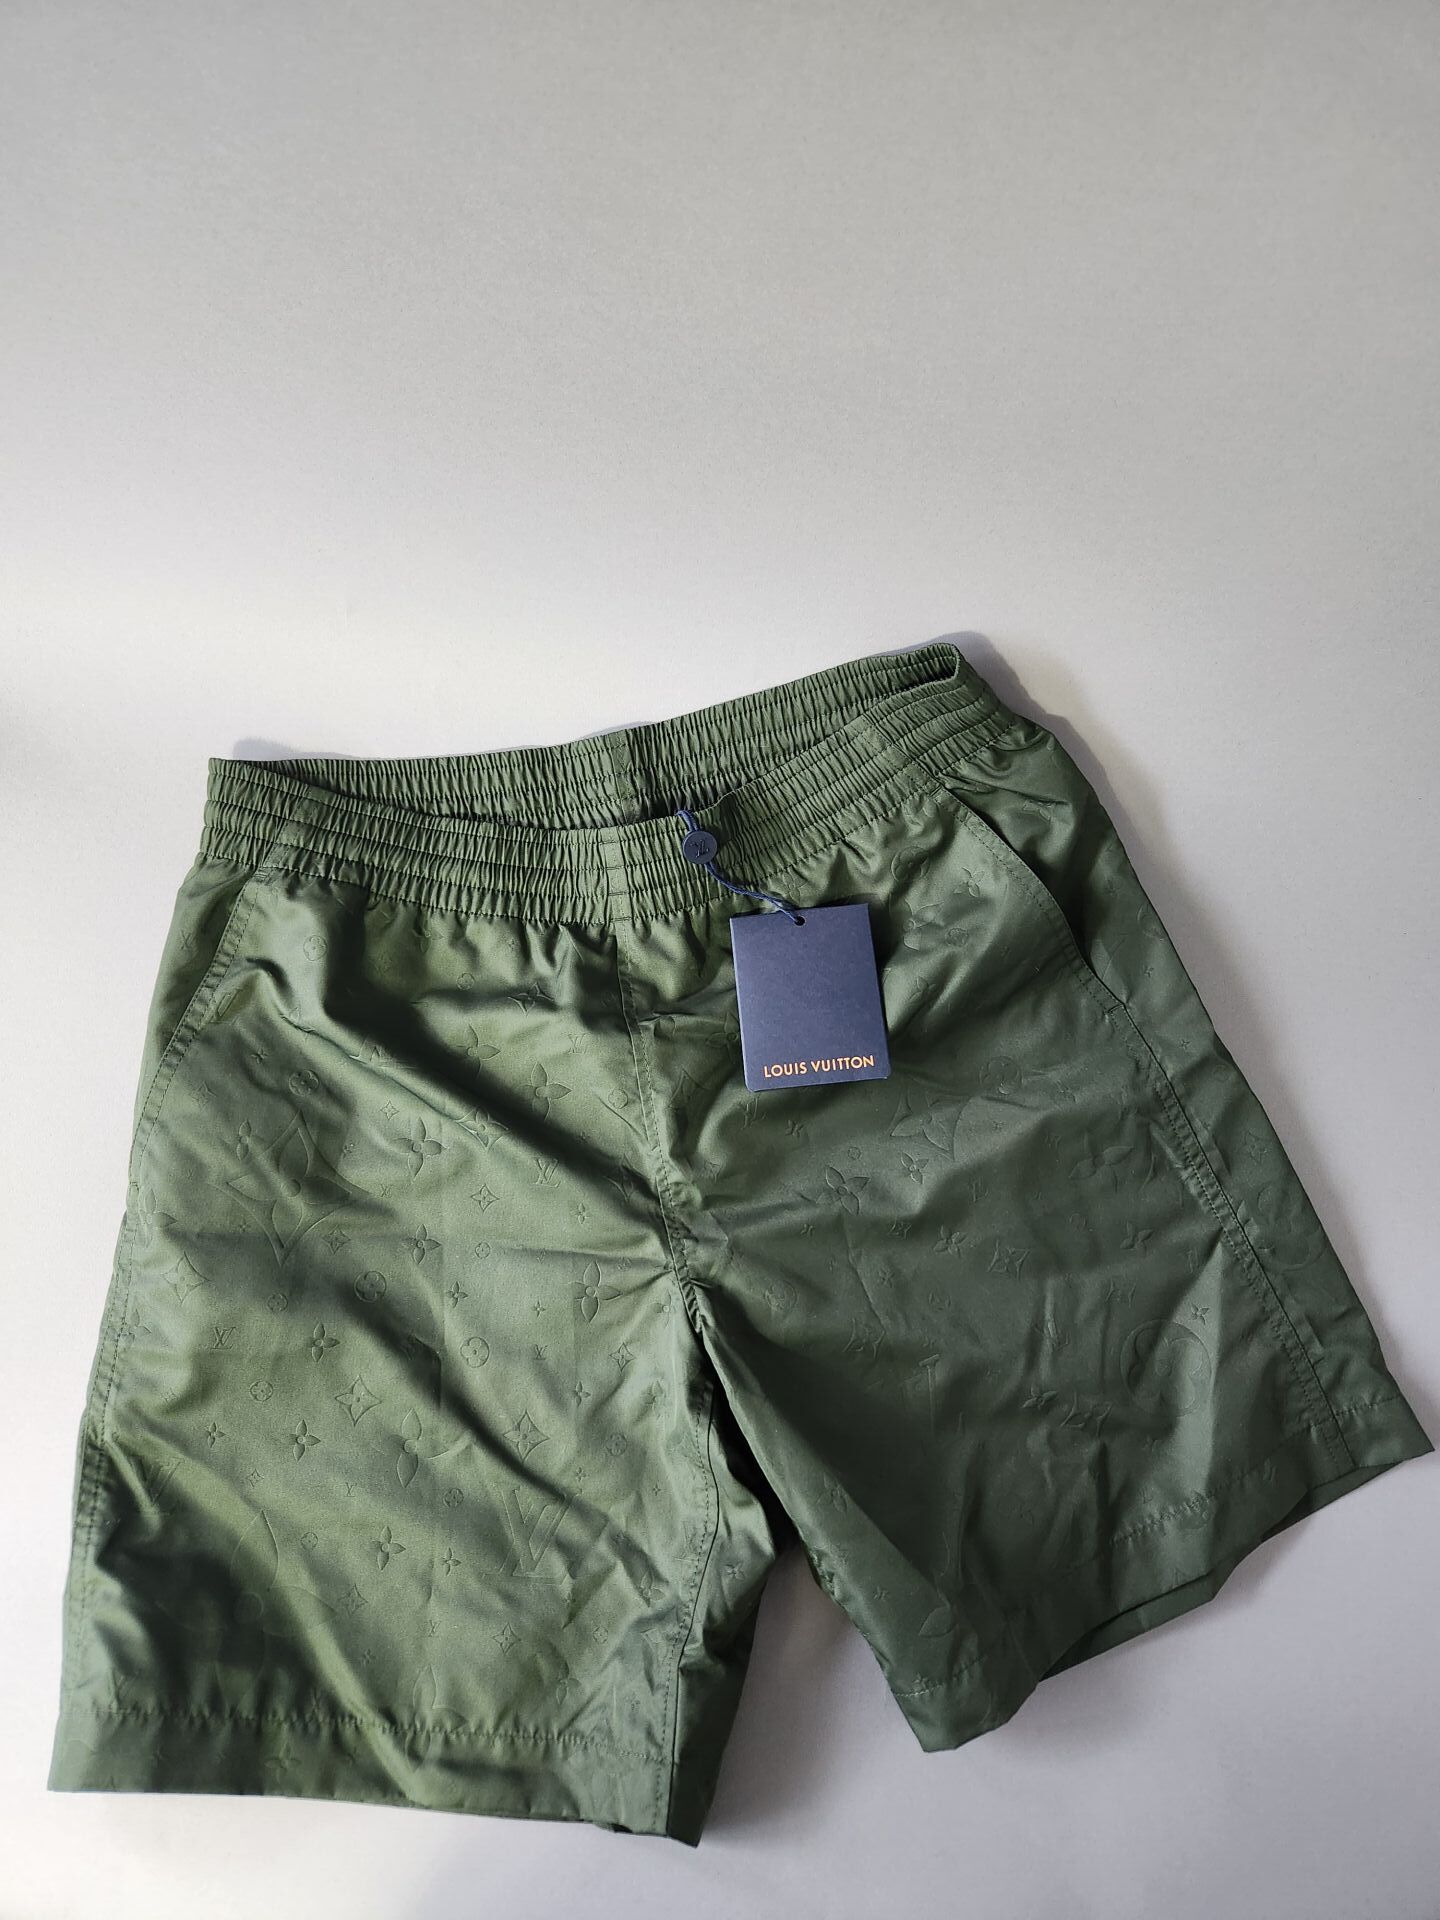 Null LOUIS VUITTON
Green Monogram swim shorts
Polyester 
Size S